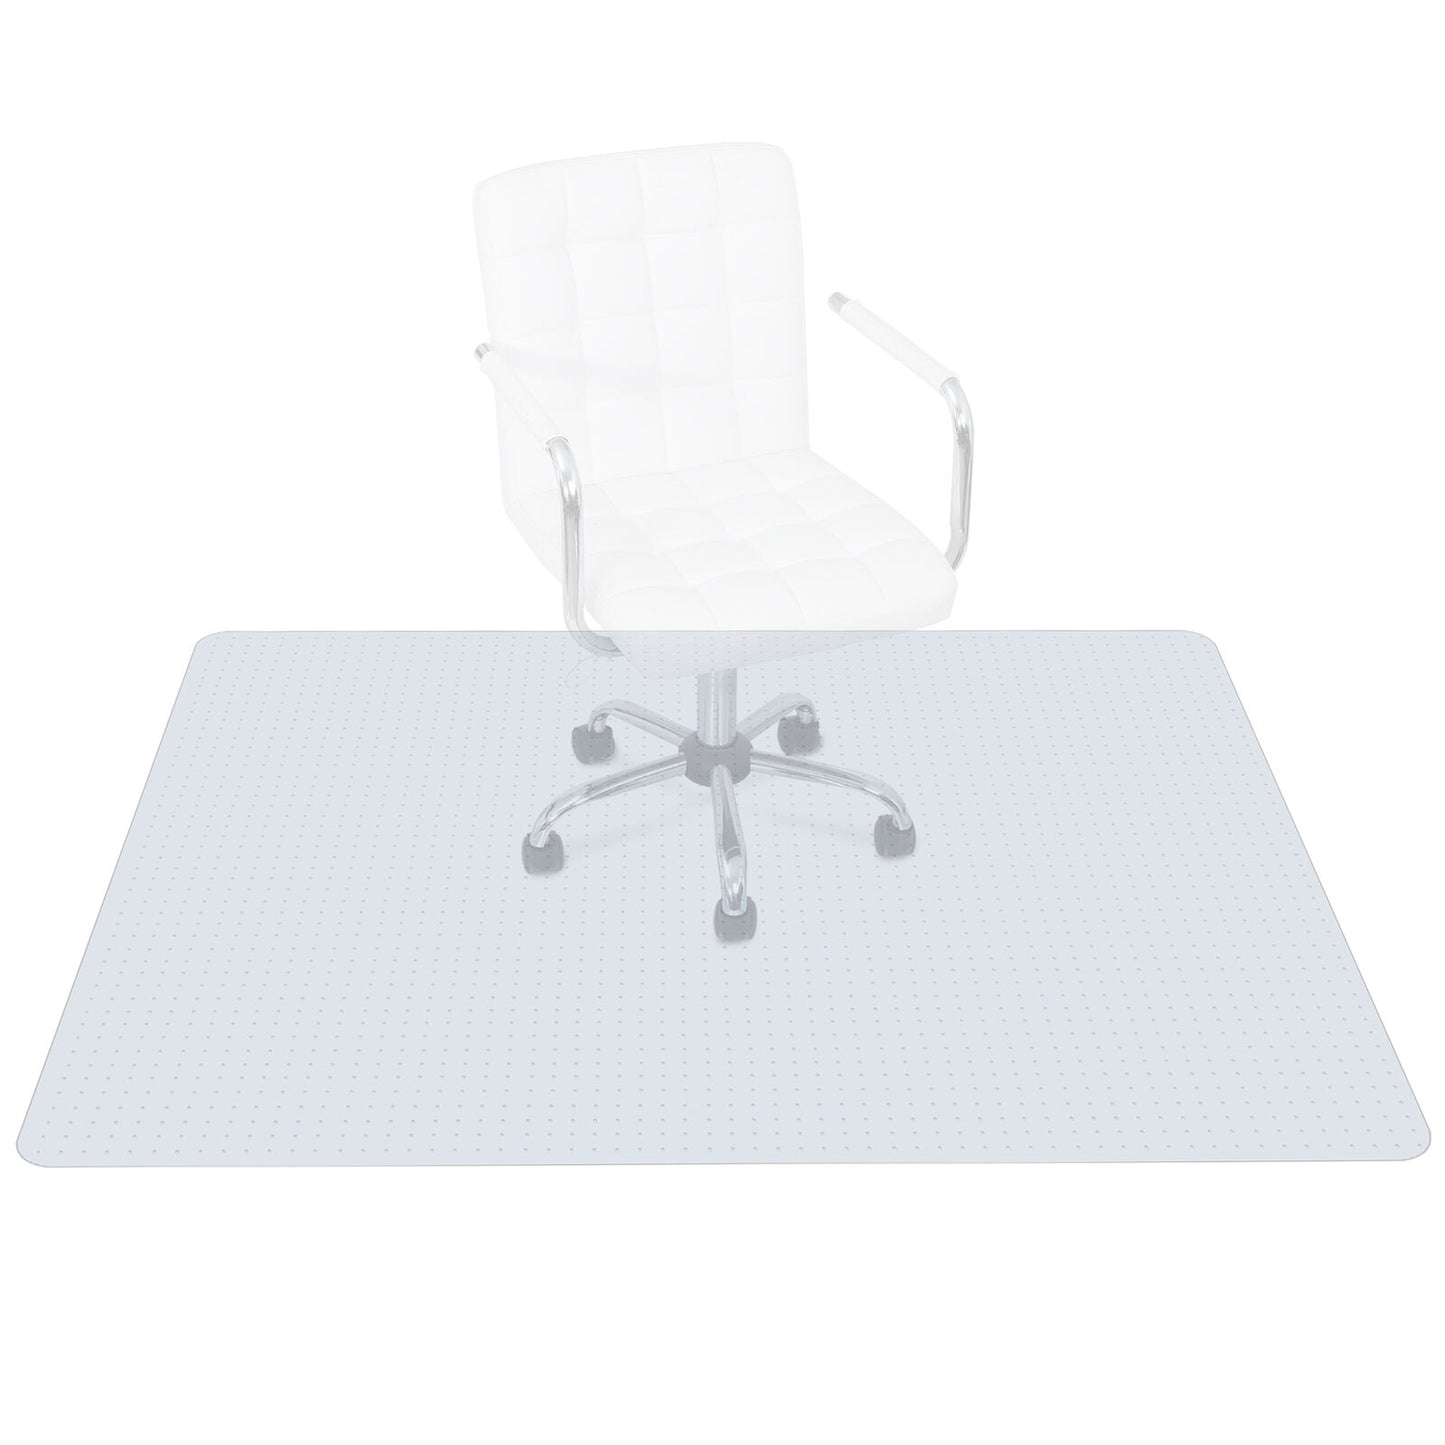 60.2"X46.4" Home Office Chair Mat PVC Floor Studded Back For Pile Carpet